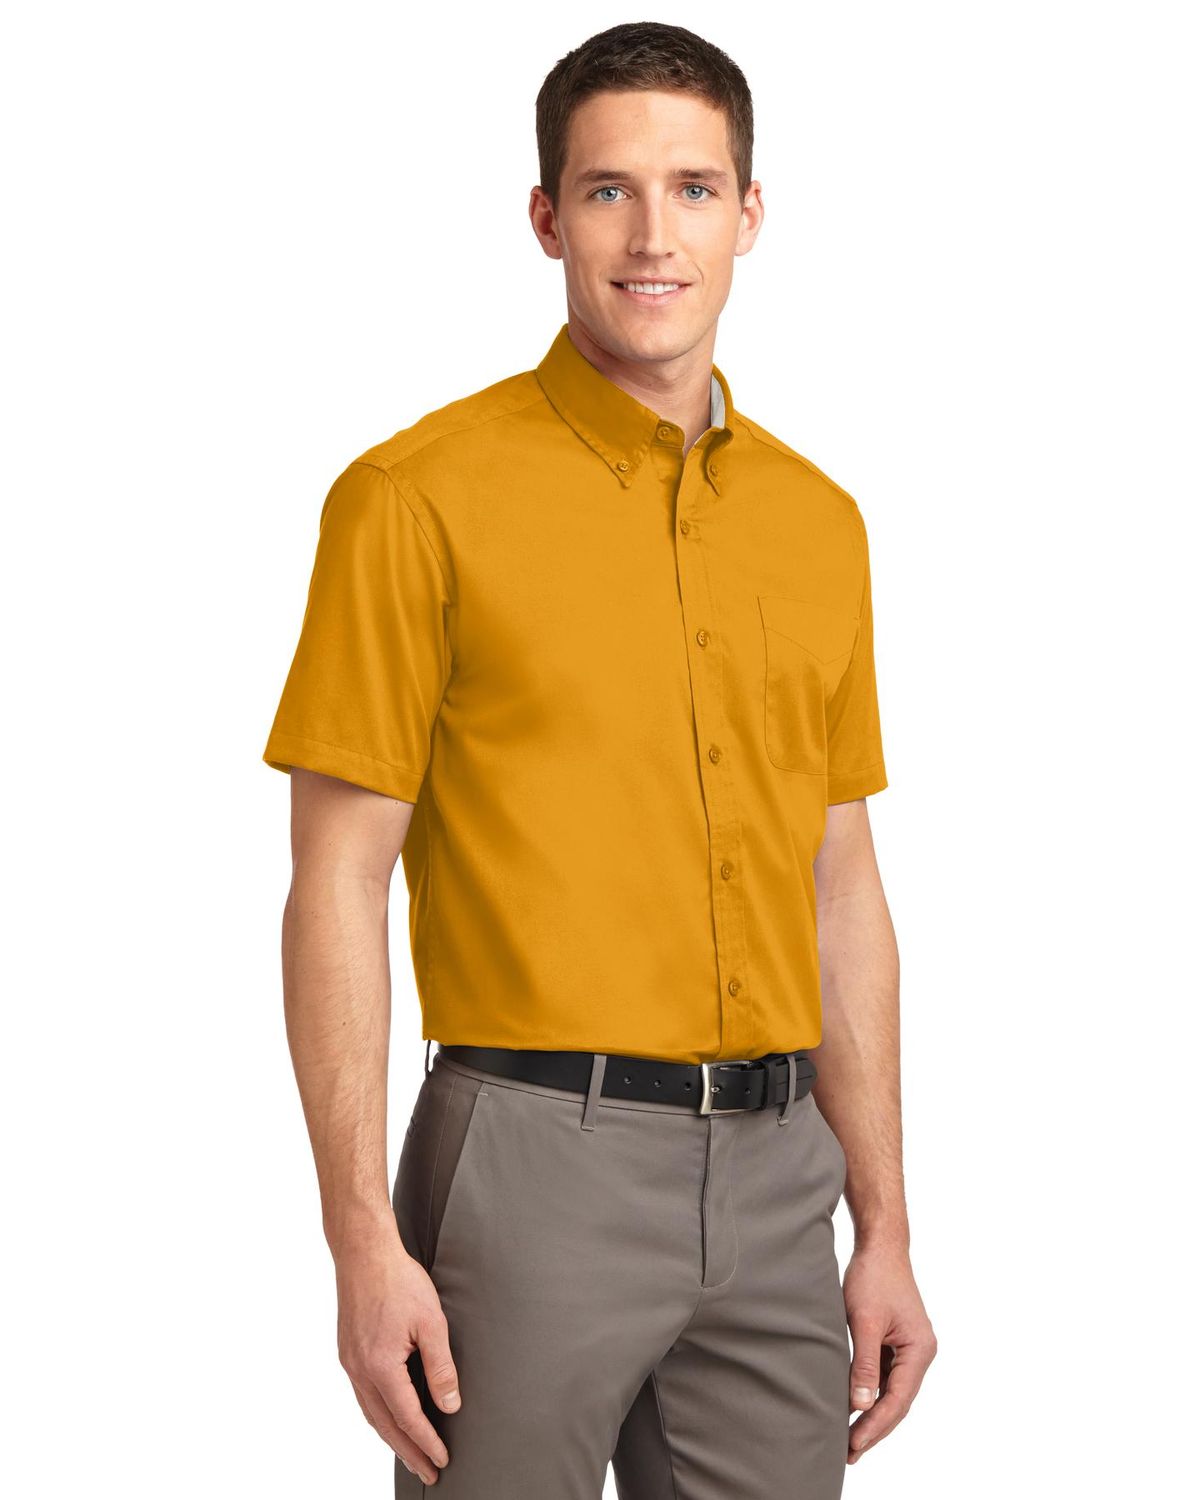 'Port Authority S508 Men’s Short Sleeve Easy Care Shirt'